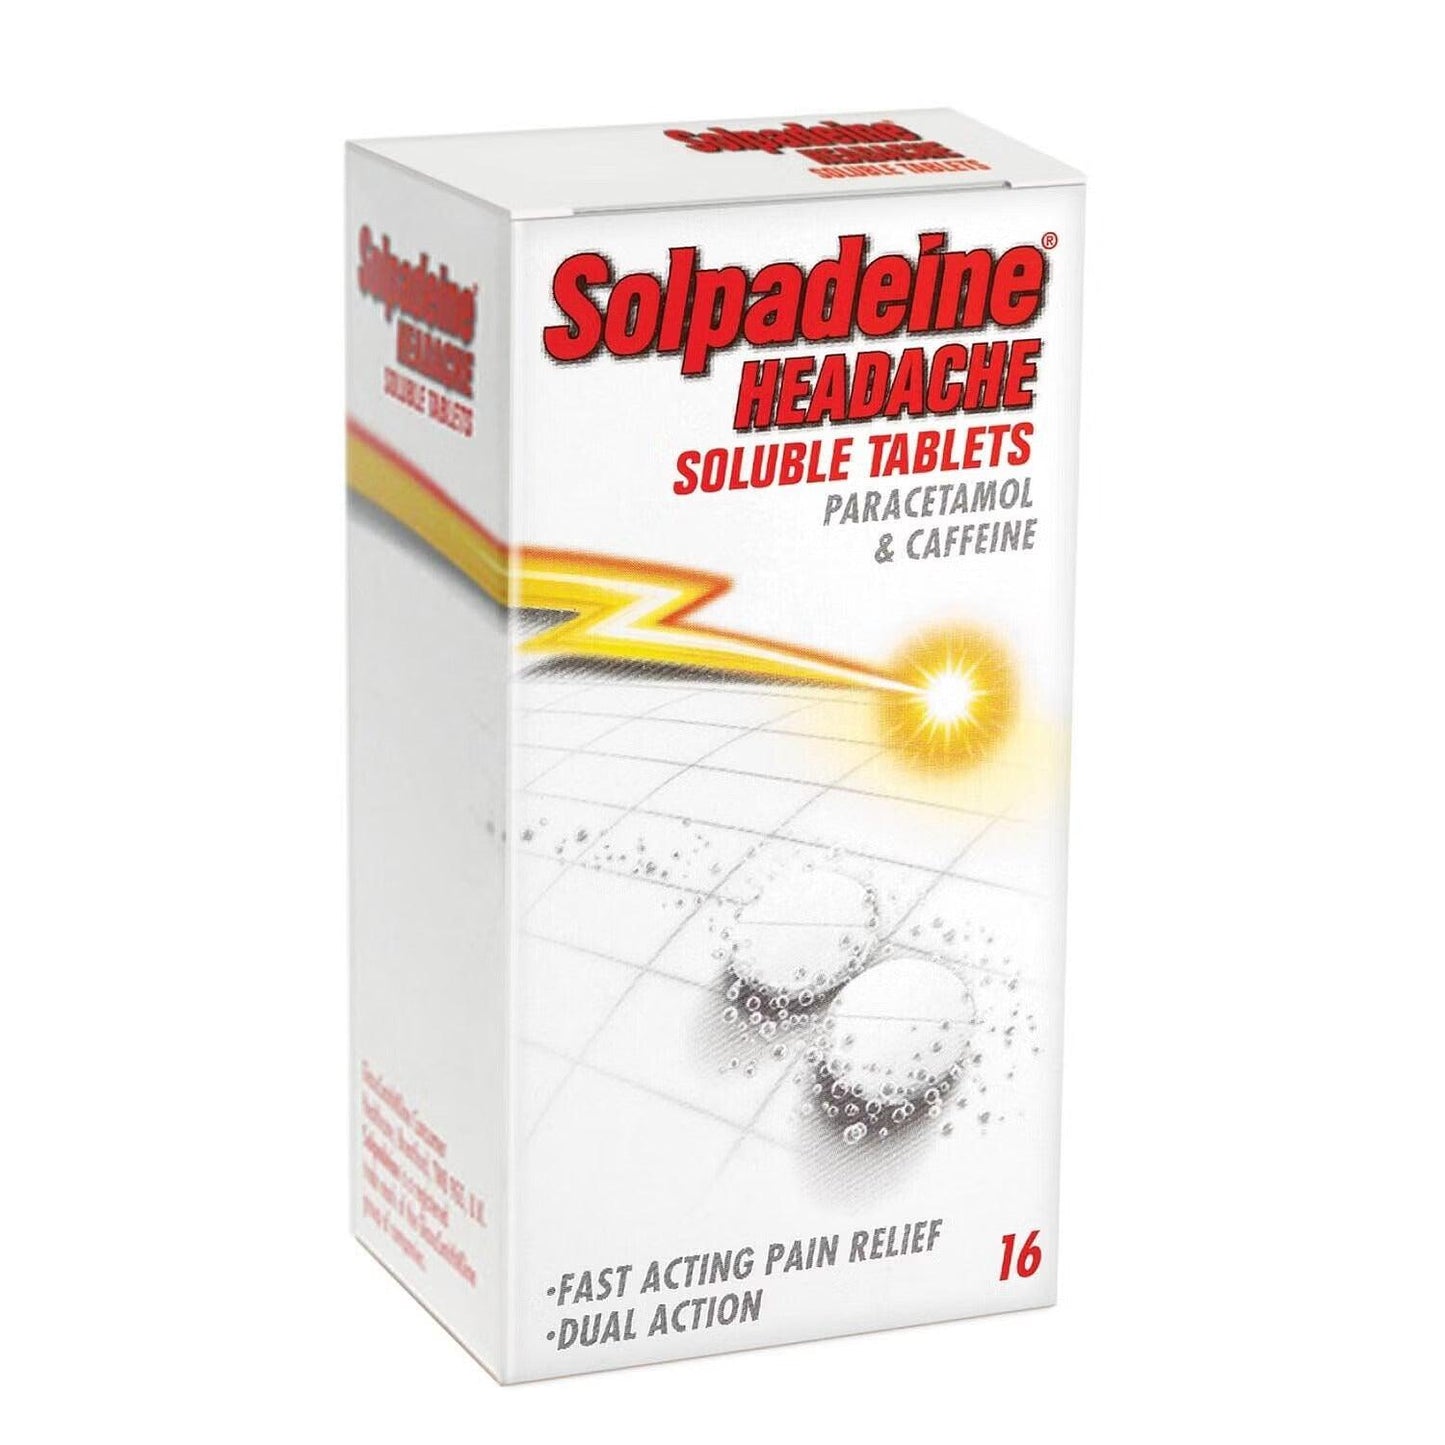 Solpadeine Headache Soluble Pack of 16 - welzo